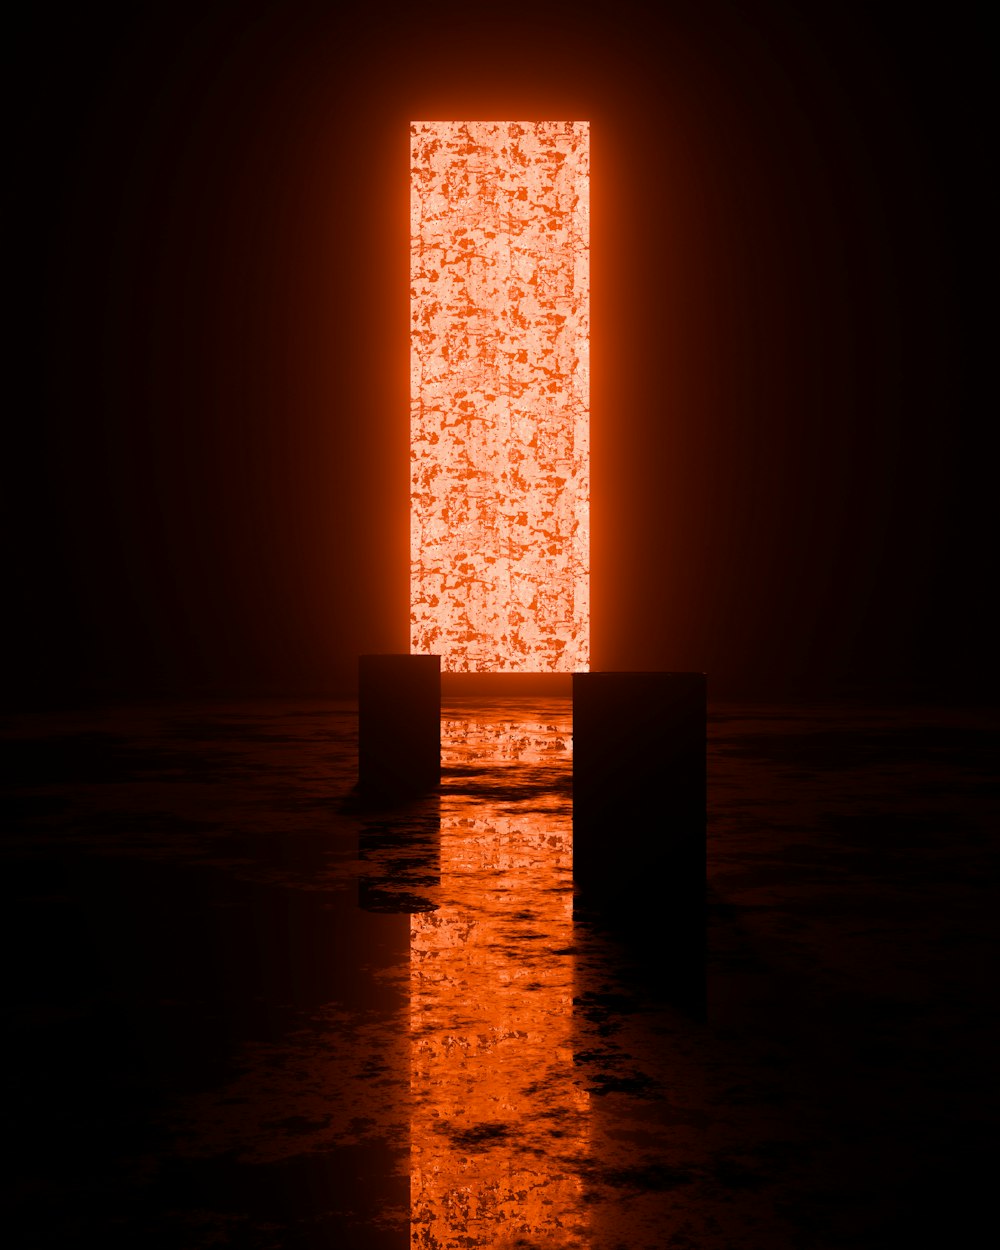 a large orange light shining in a dark room